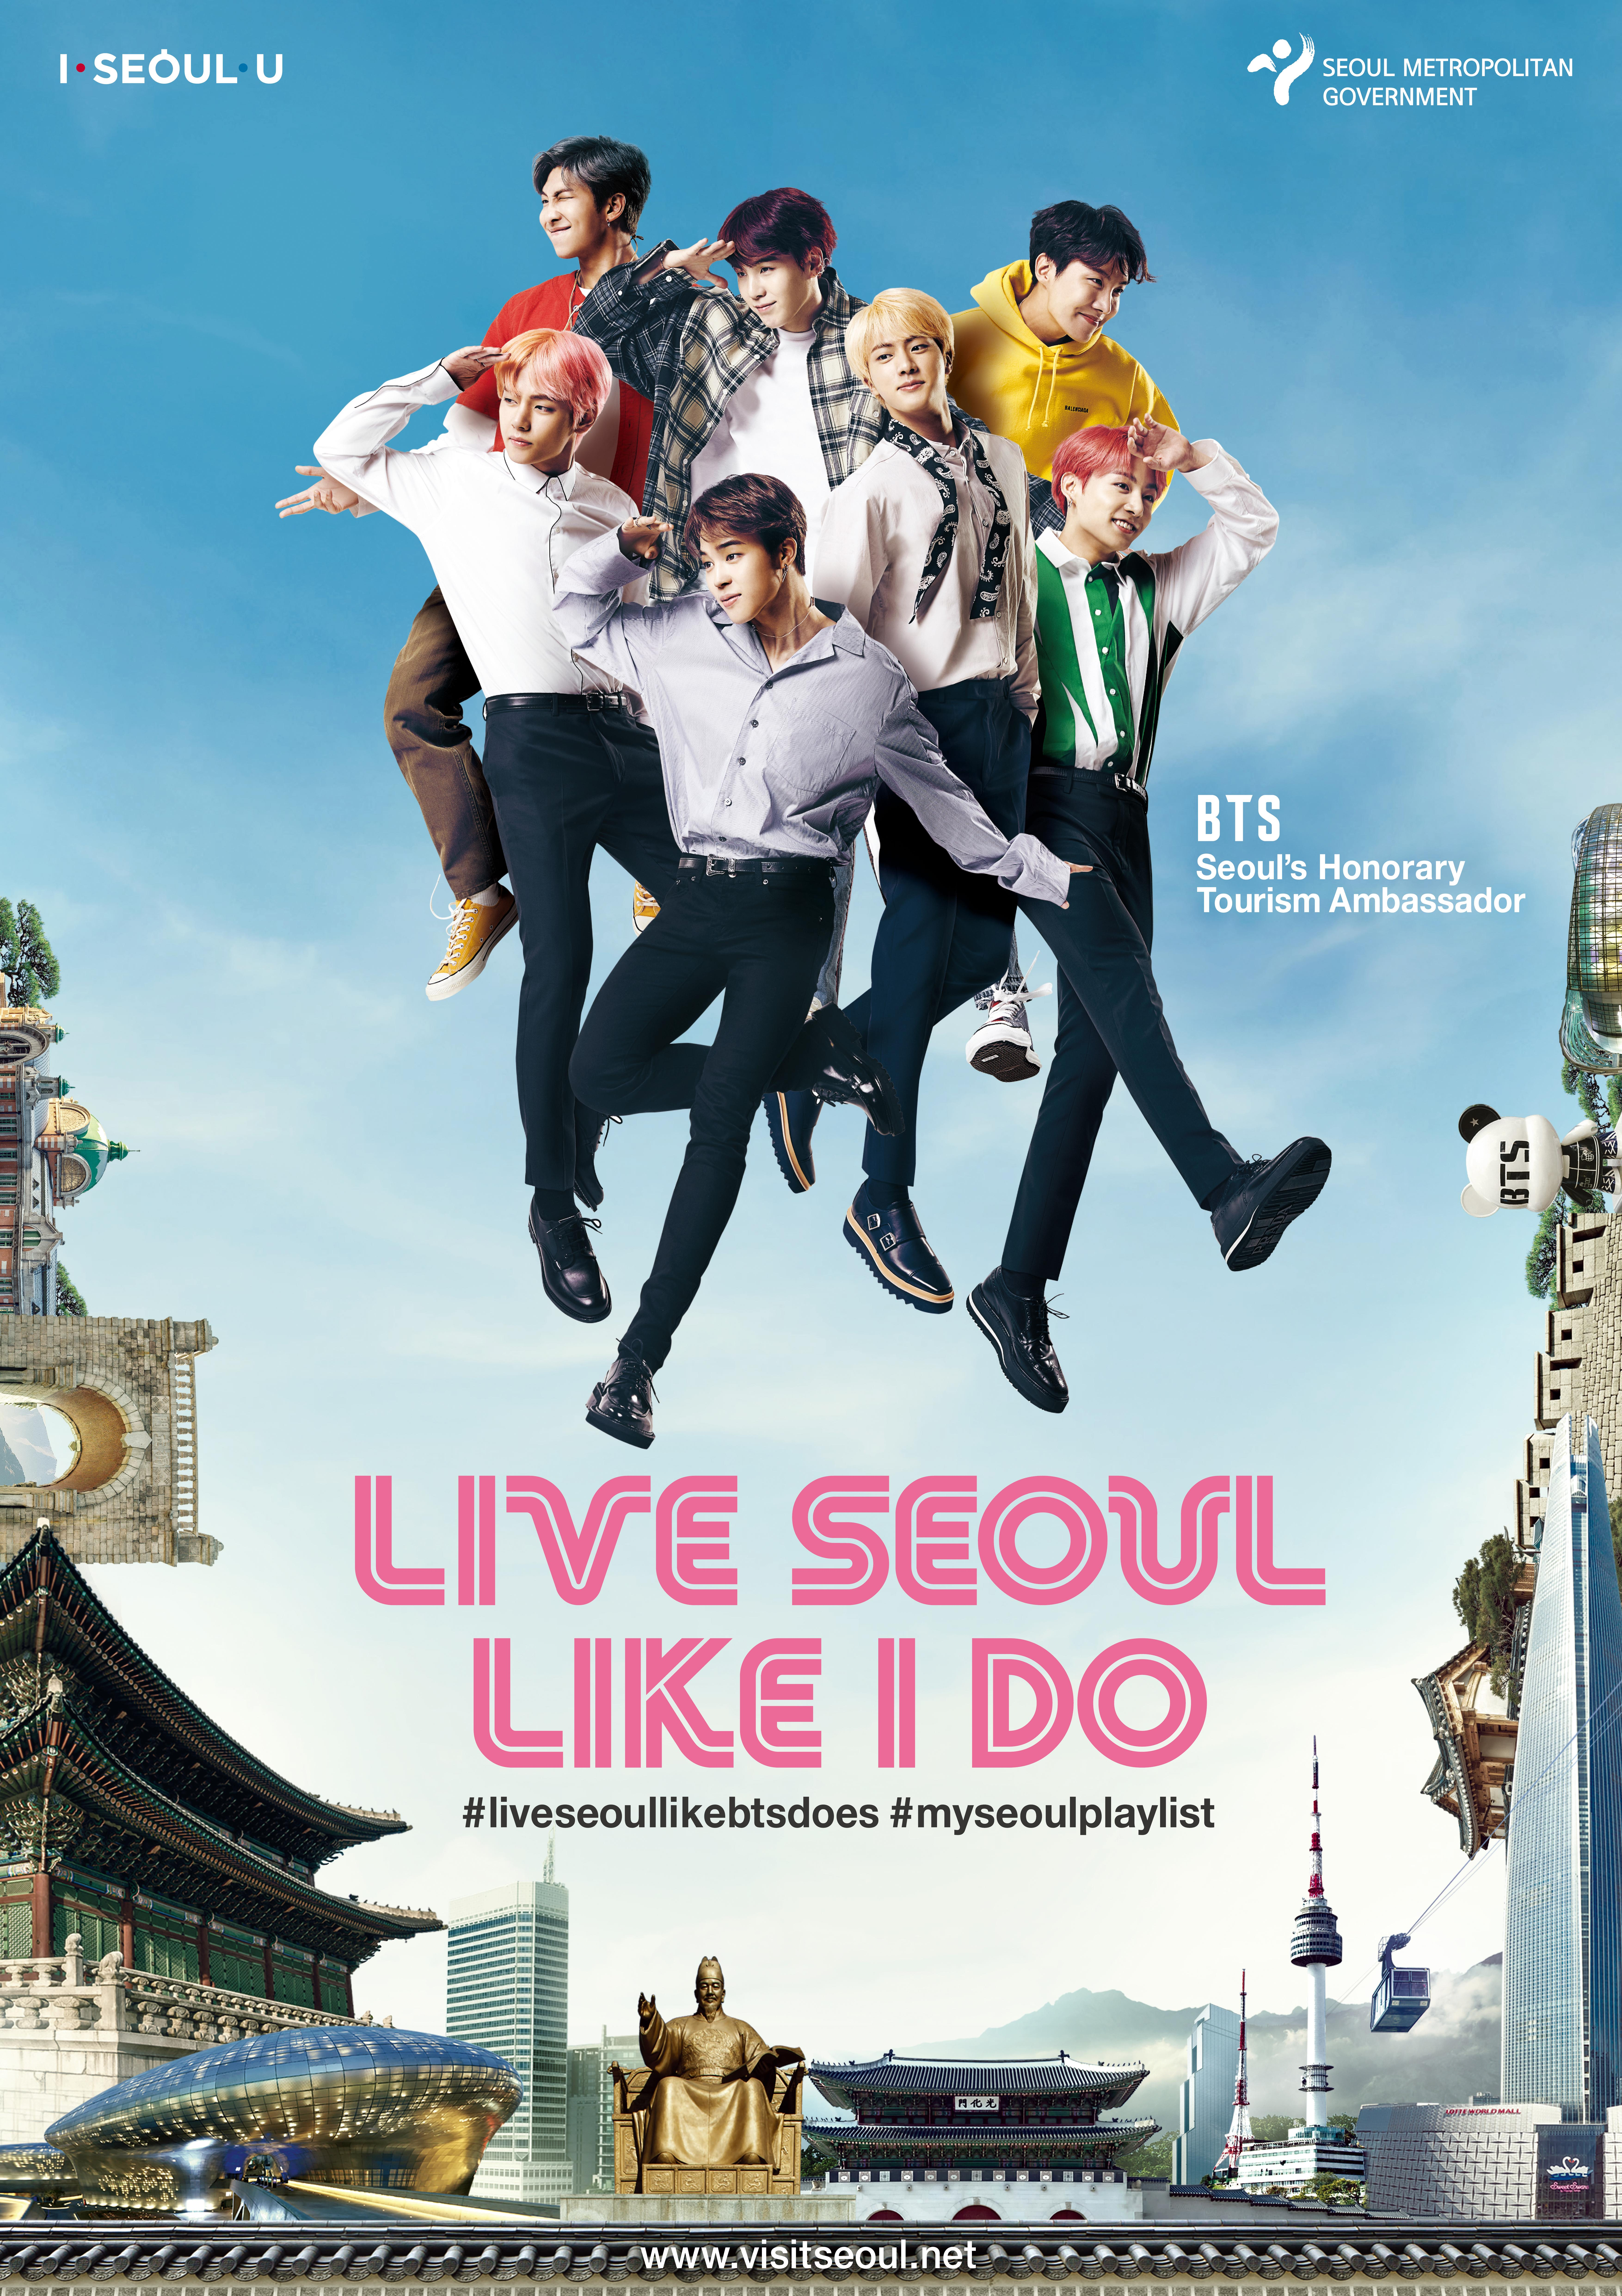 Live Seoul like I Do, Visit Seoul Official Travel Guide to Seoul